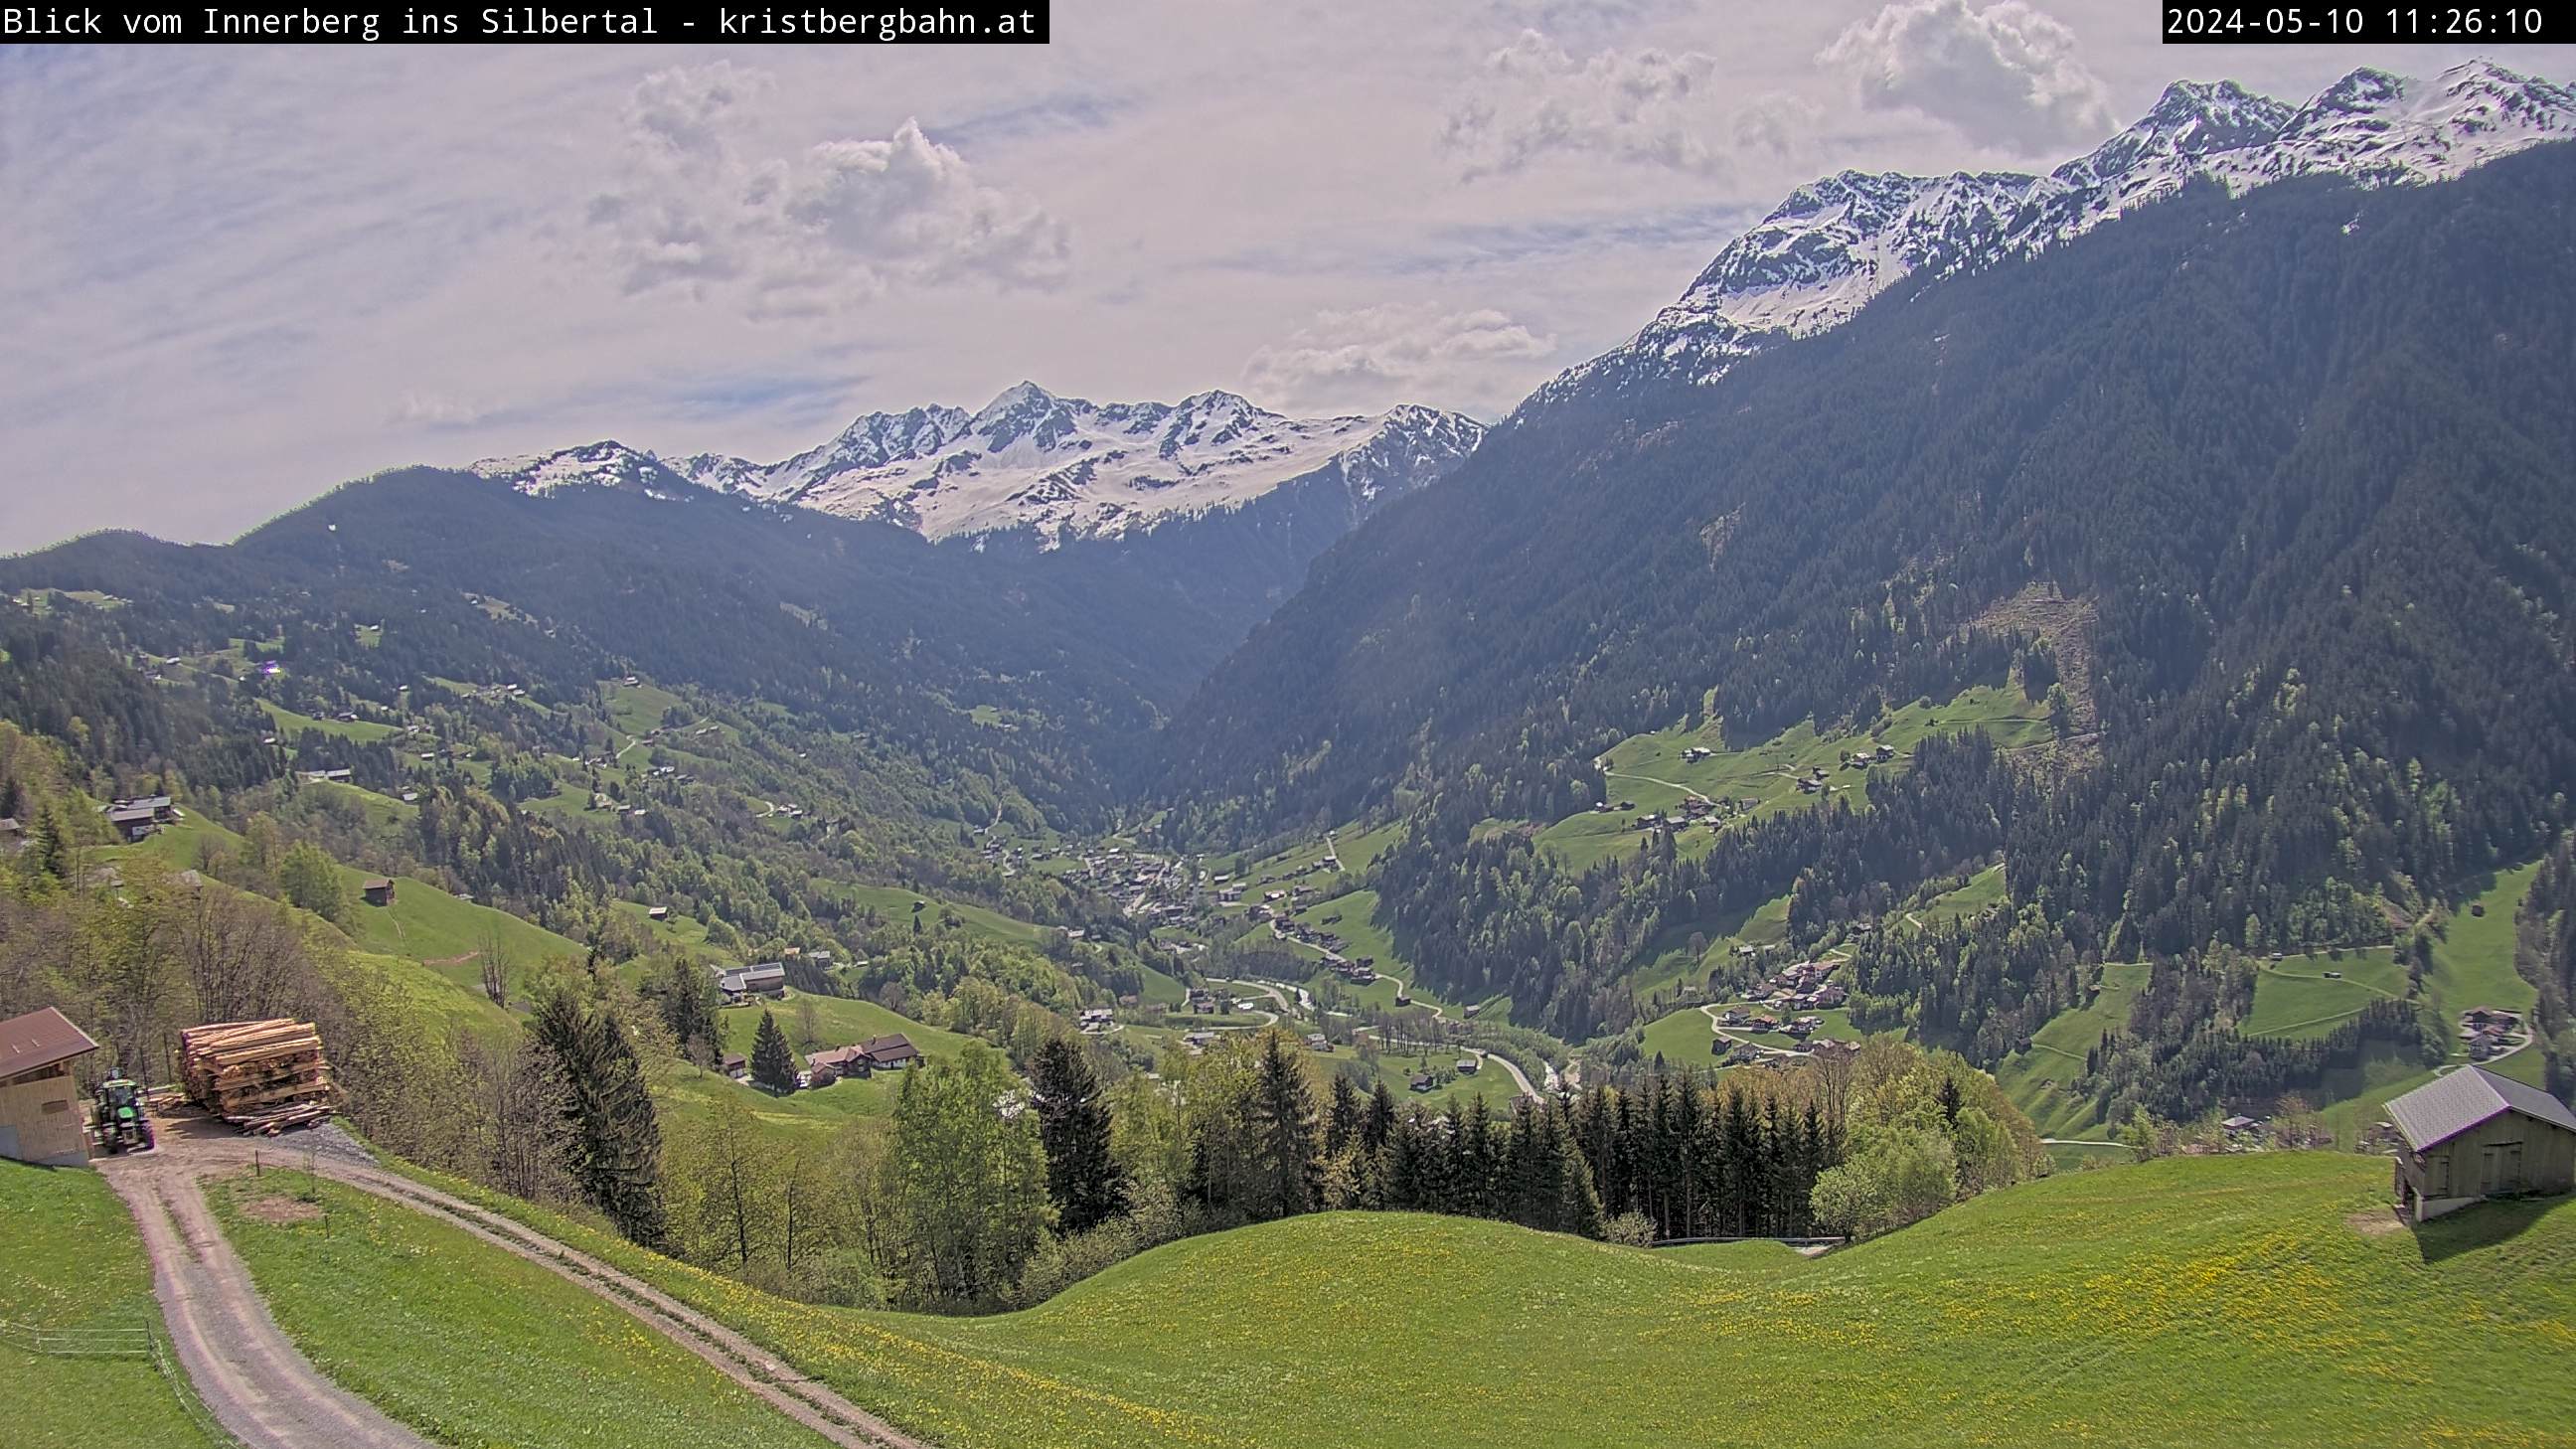 Webcam view from Innerberg towards Silbertal